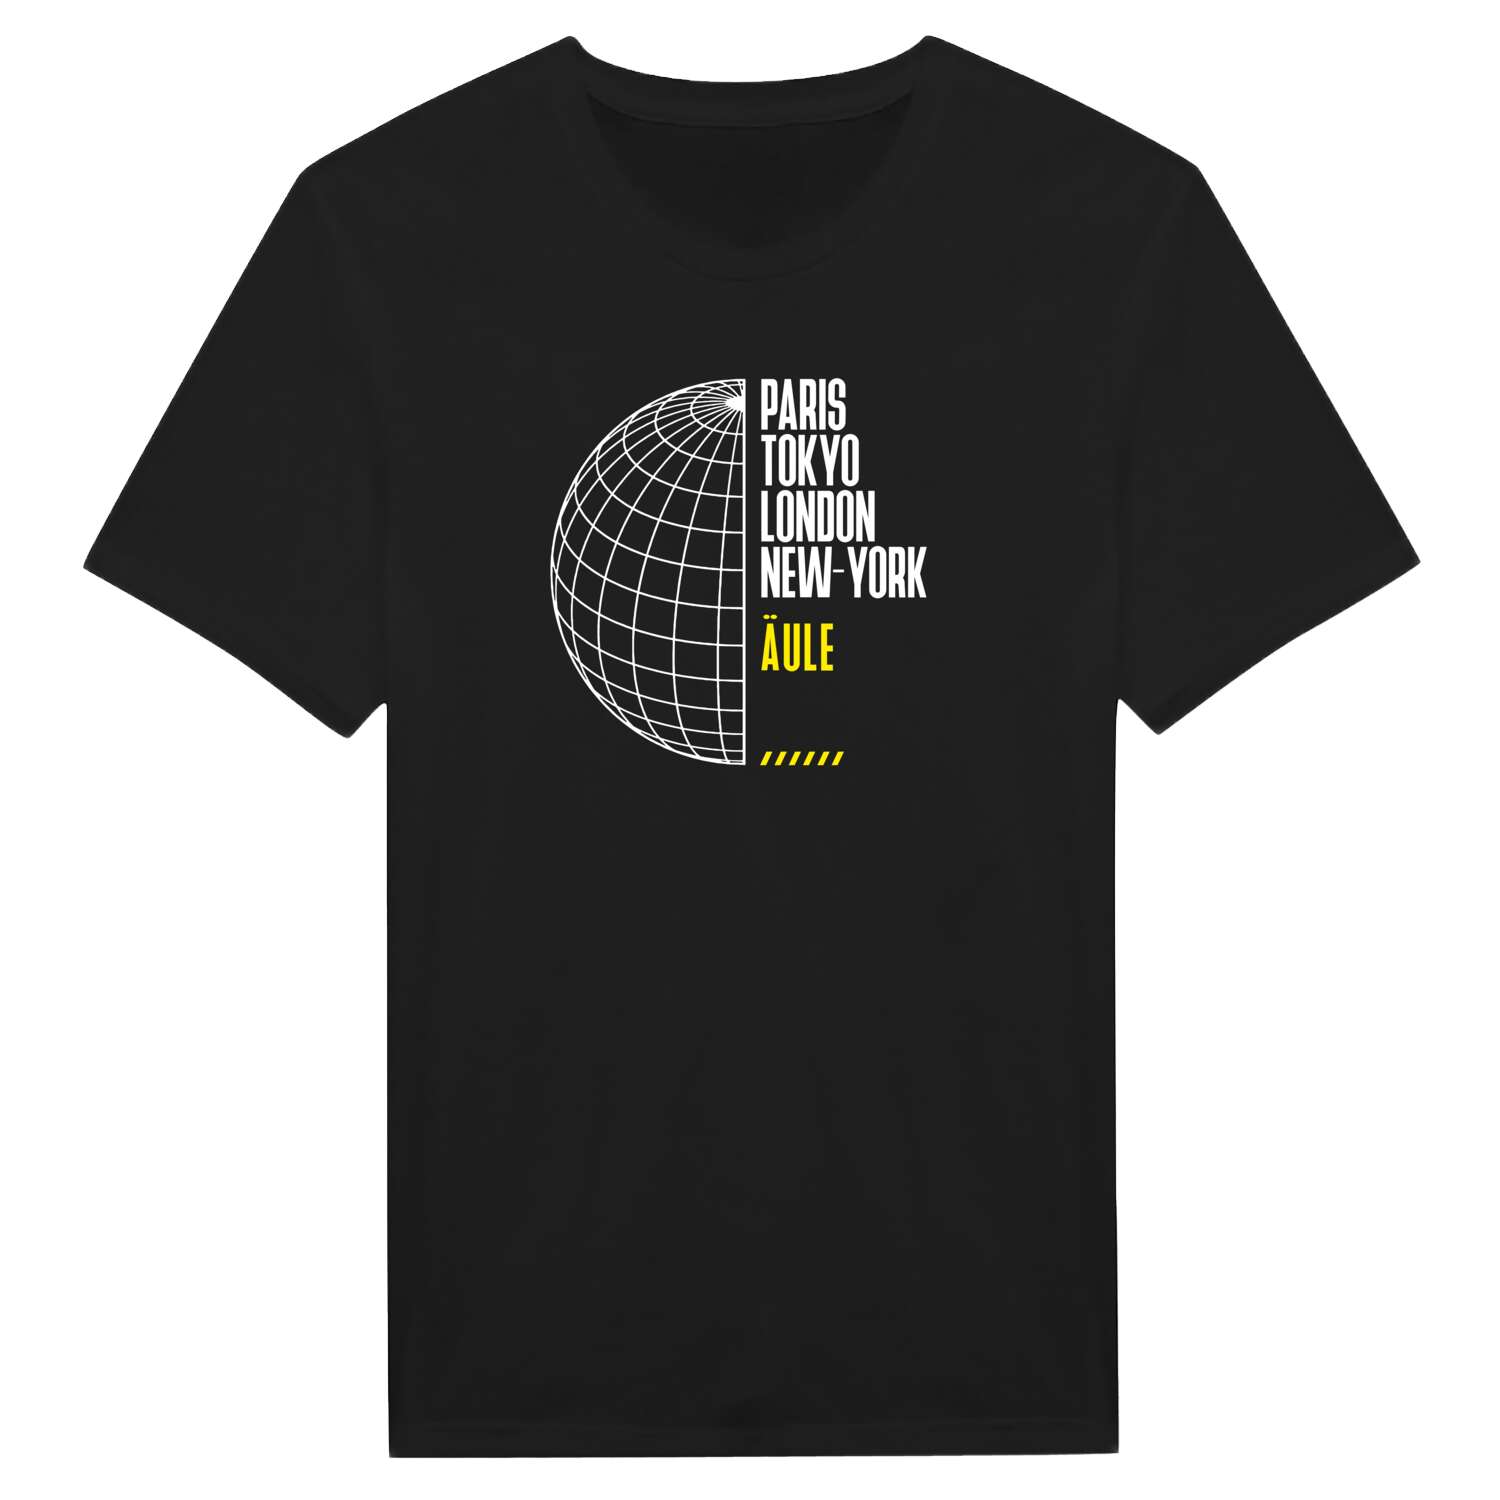 Äule T-Shirt »Paris Tokyo London«